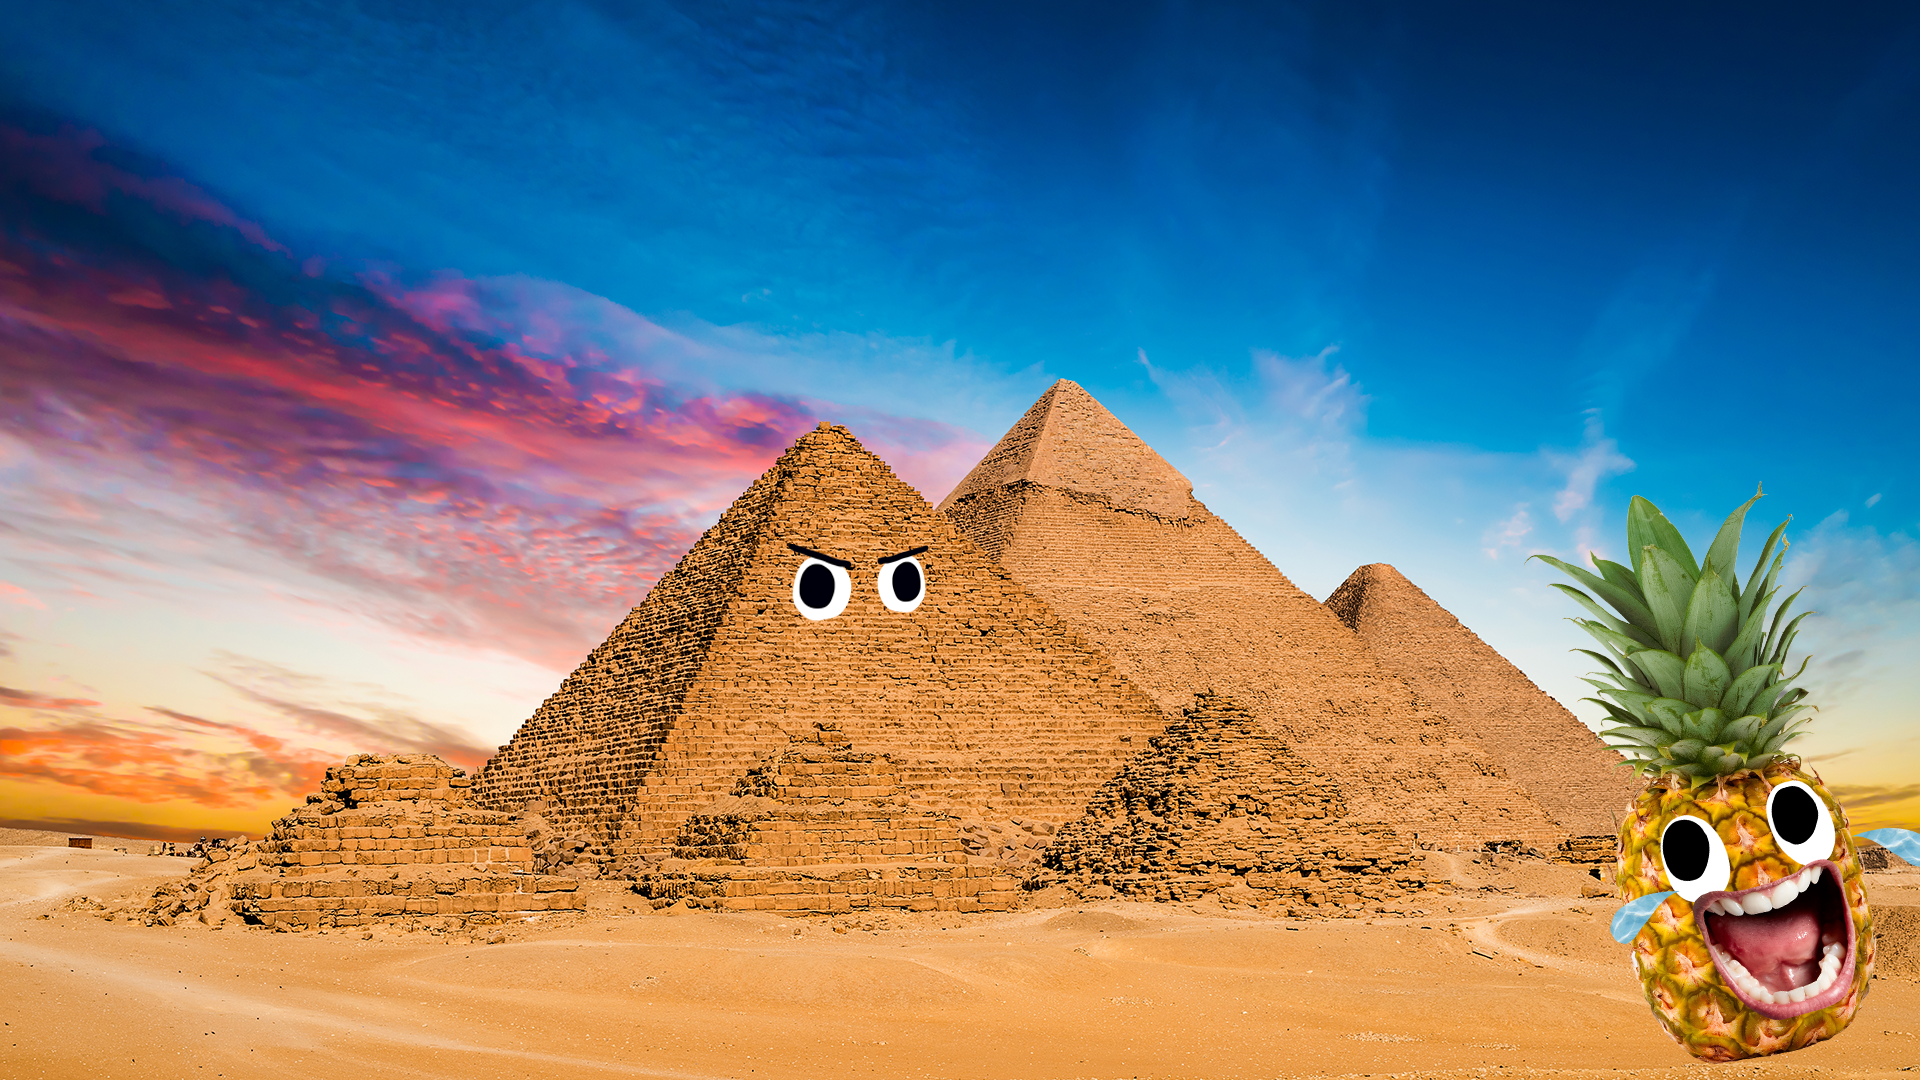 Pyramids of Giza with googly eyes